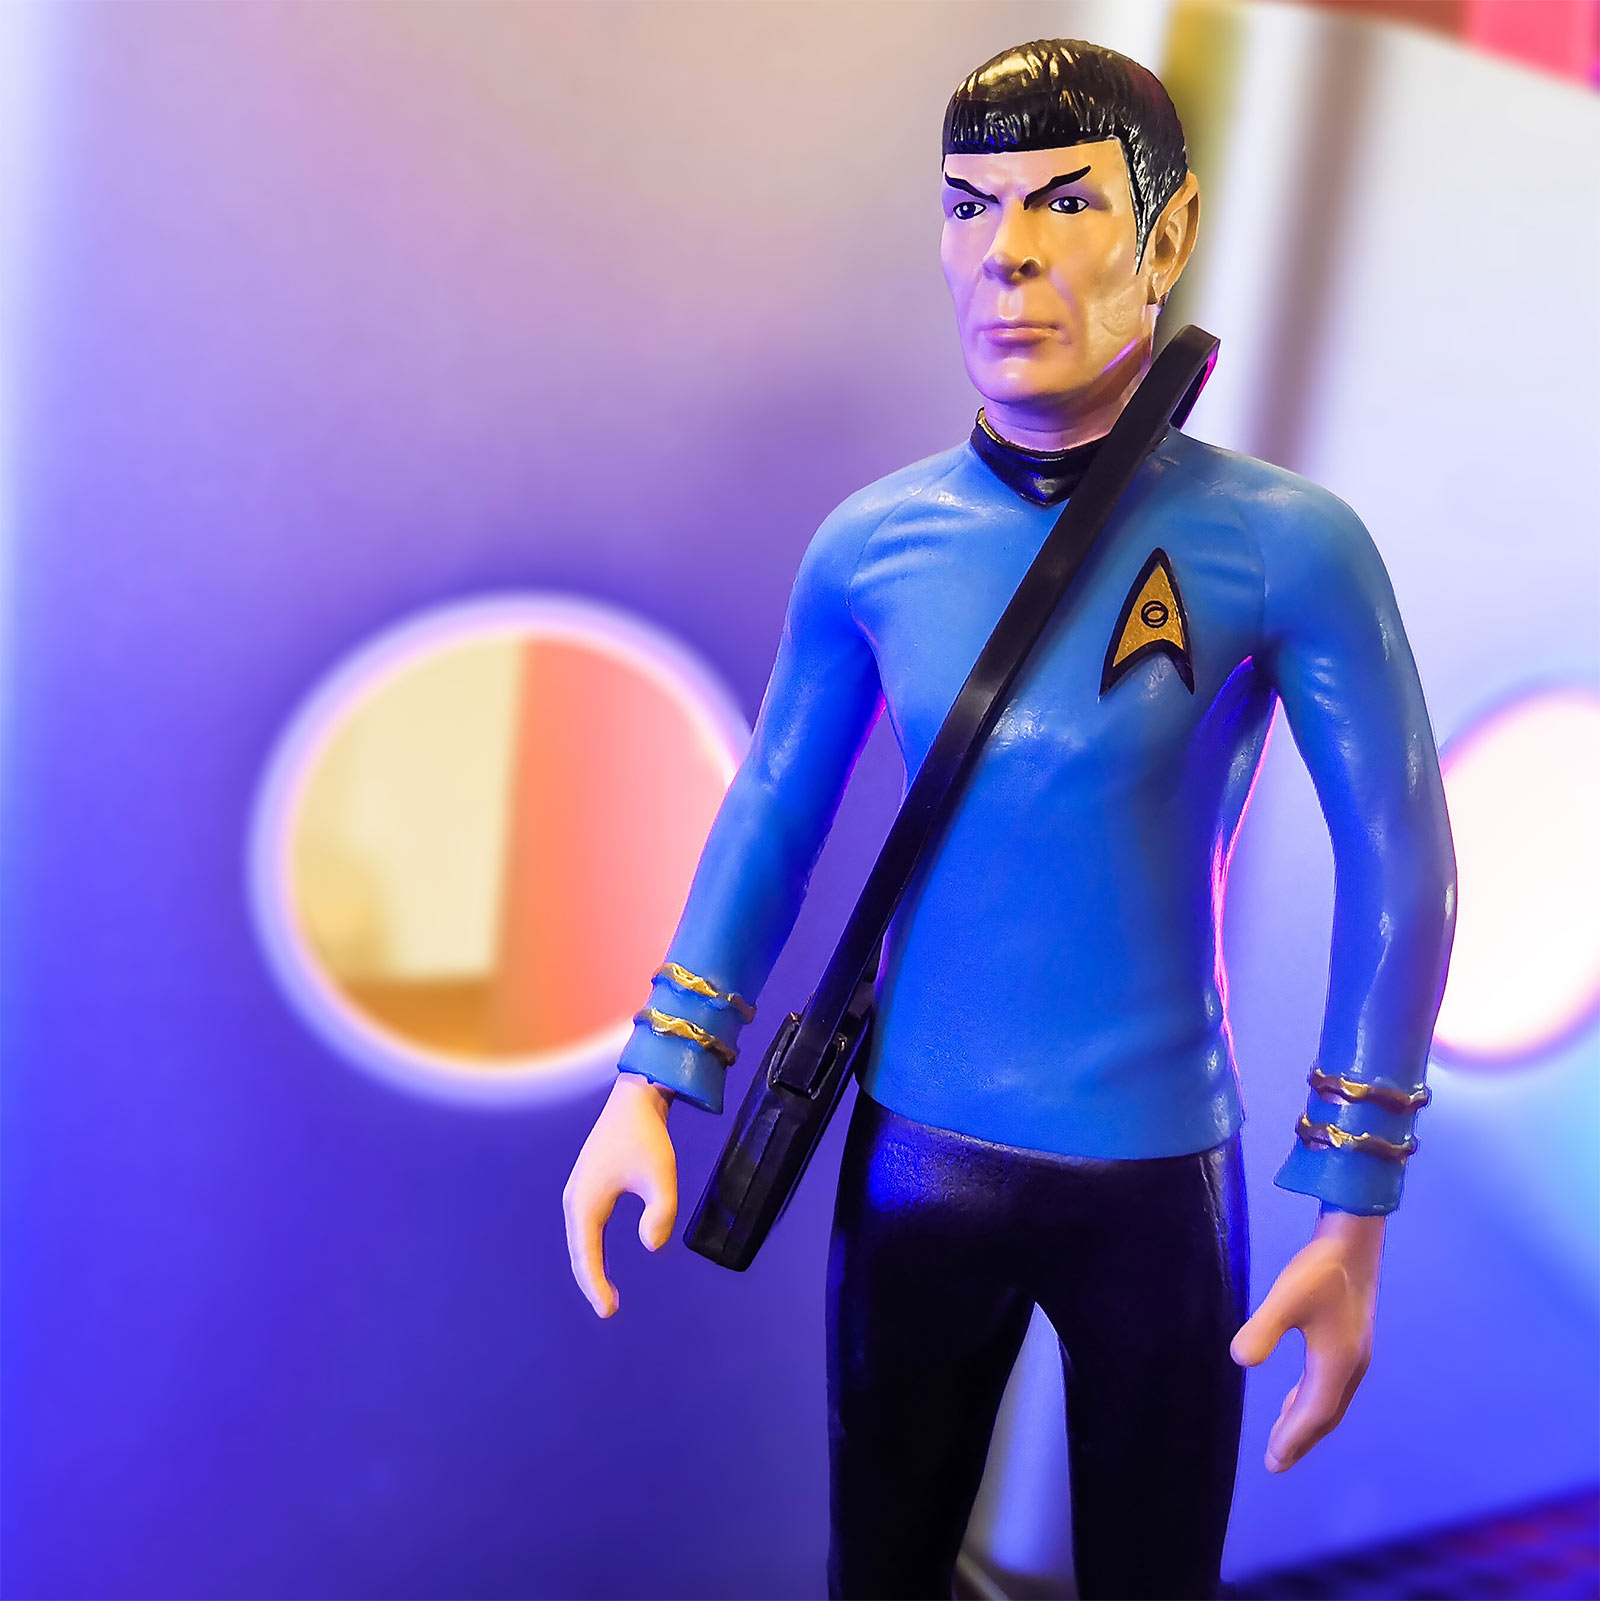 Star Trek - Spock Bendyfigs Figur 19 cm